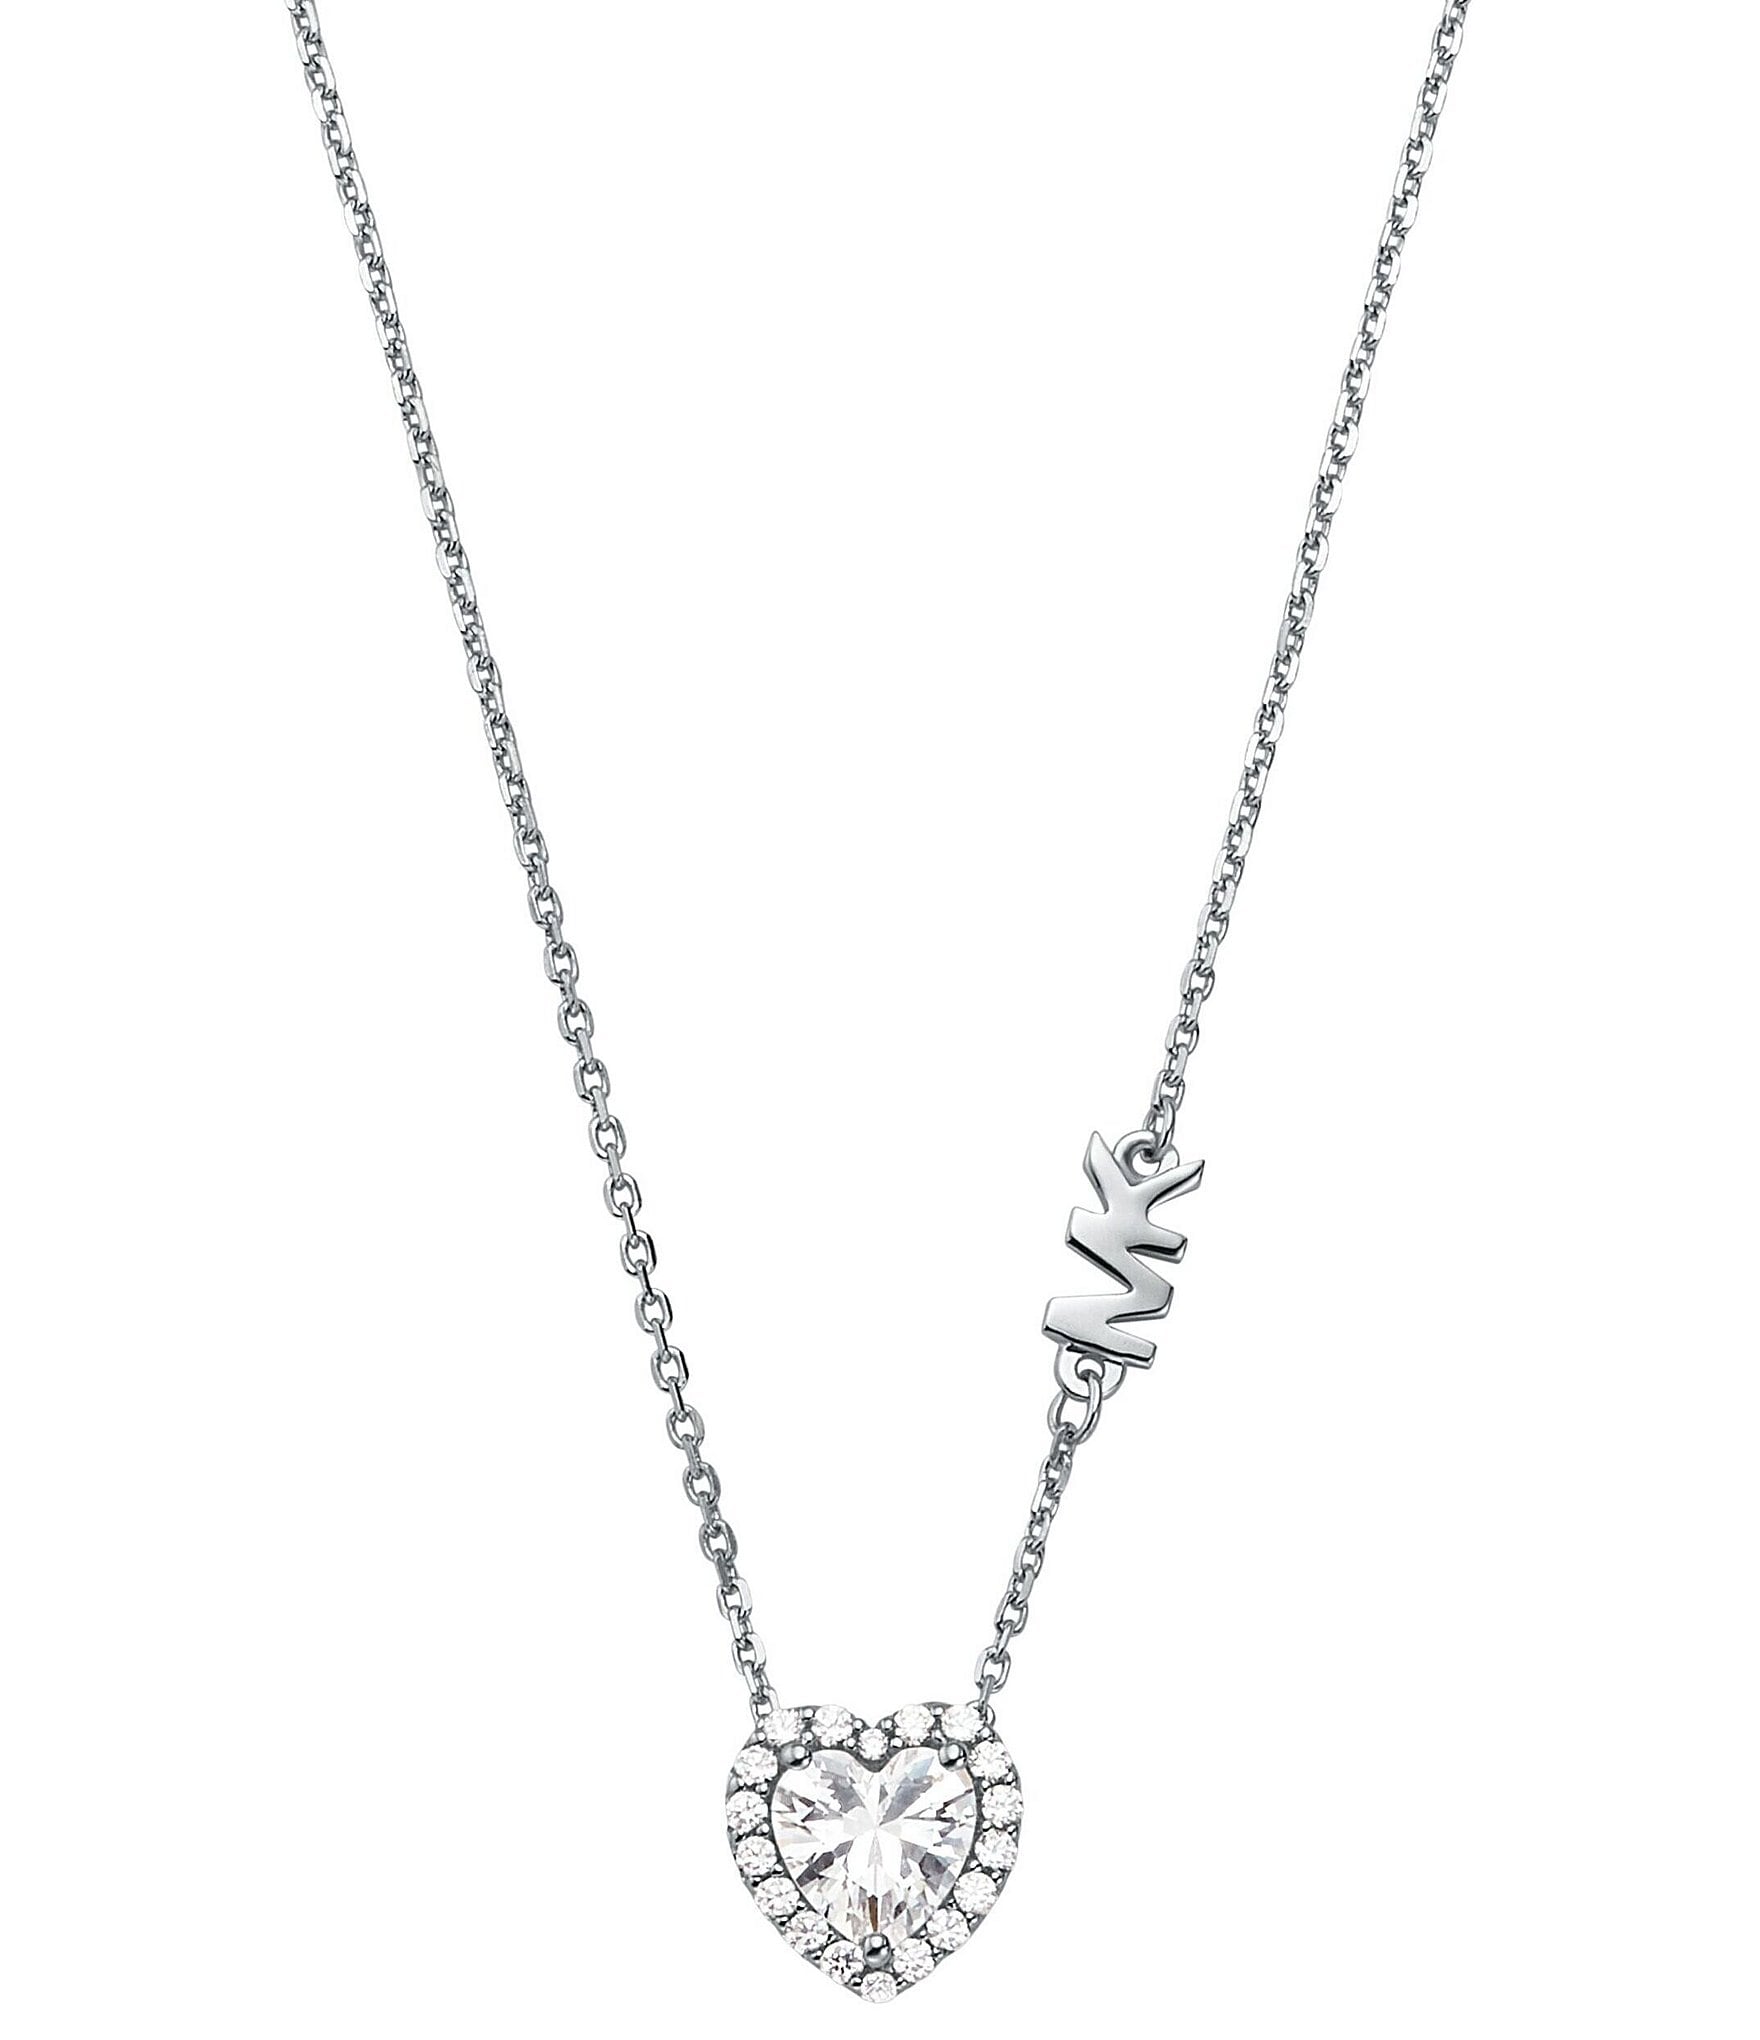 Michael Kors | Jewelry | Michael Kors Heart Necklace | Poshmark